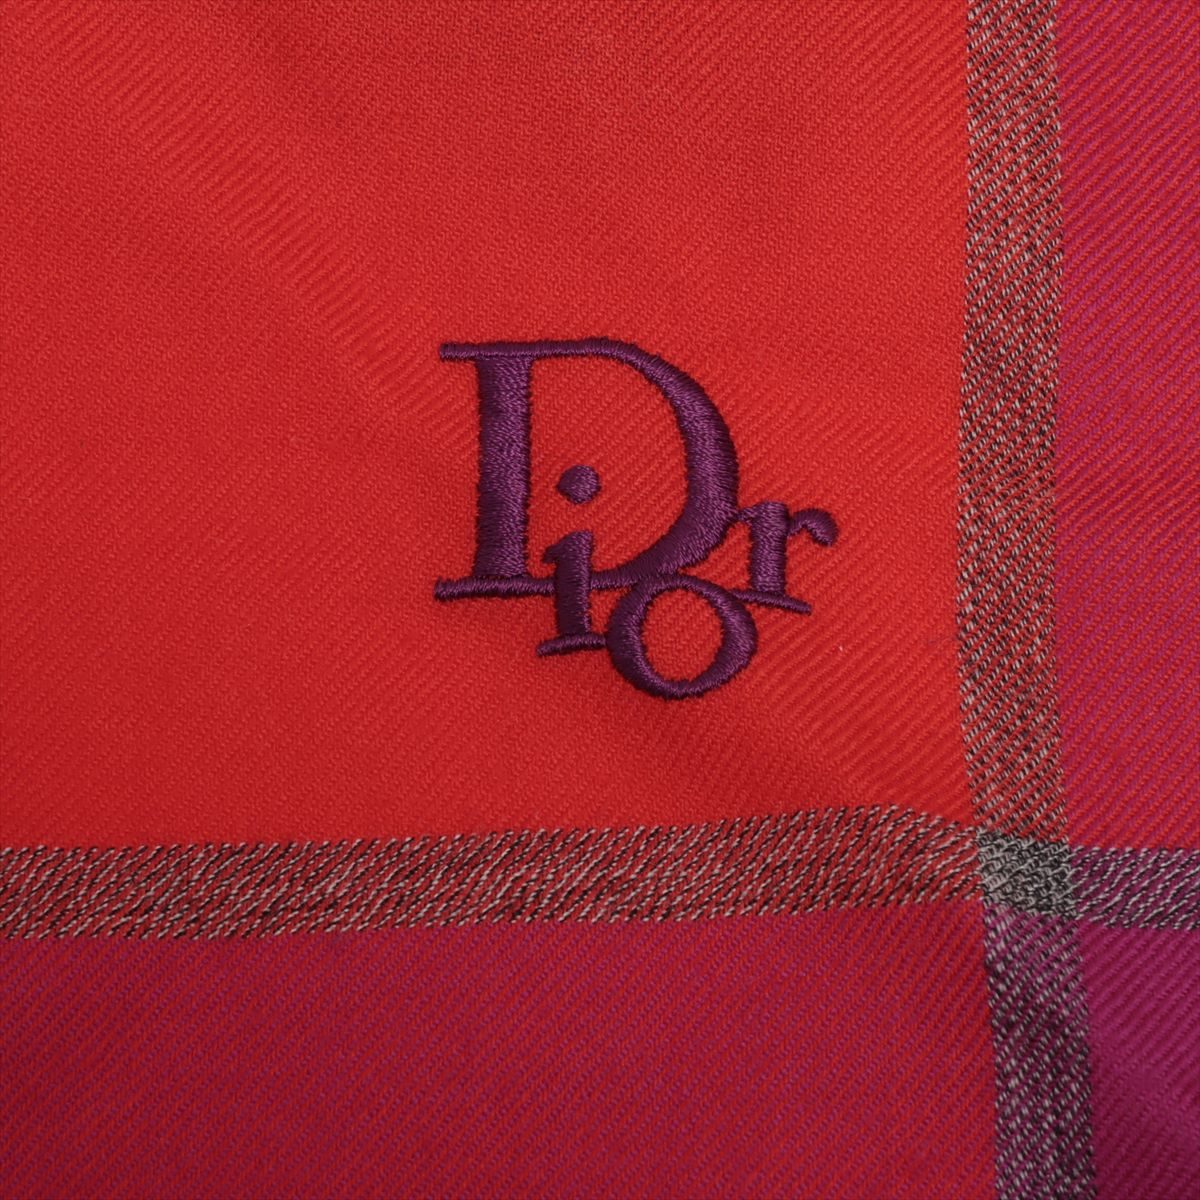 Dior Dior logo Stole Unknown material Red x purple Shawl